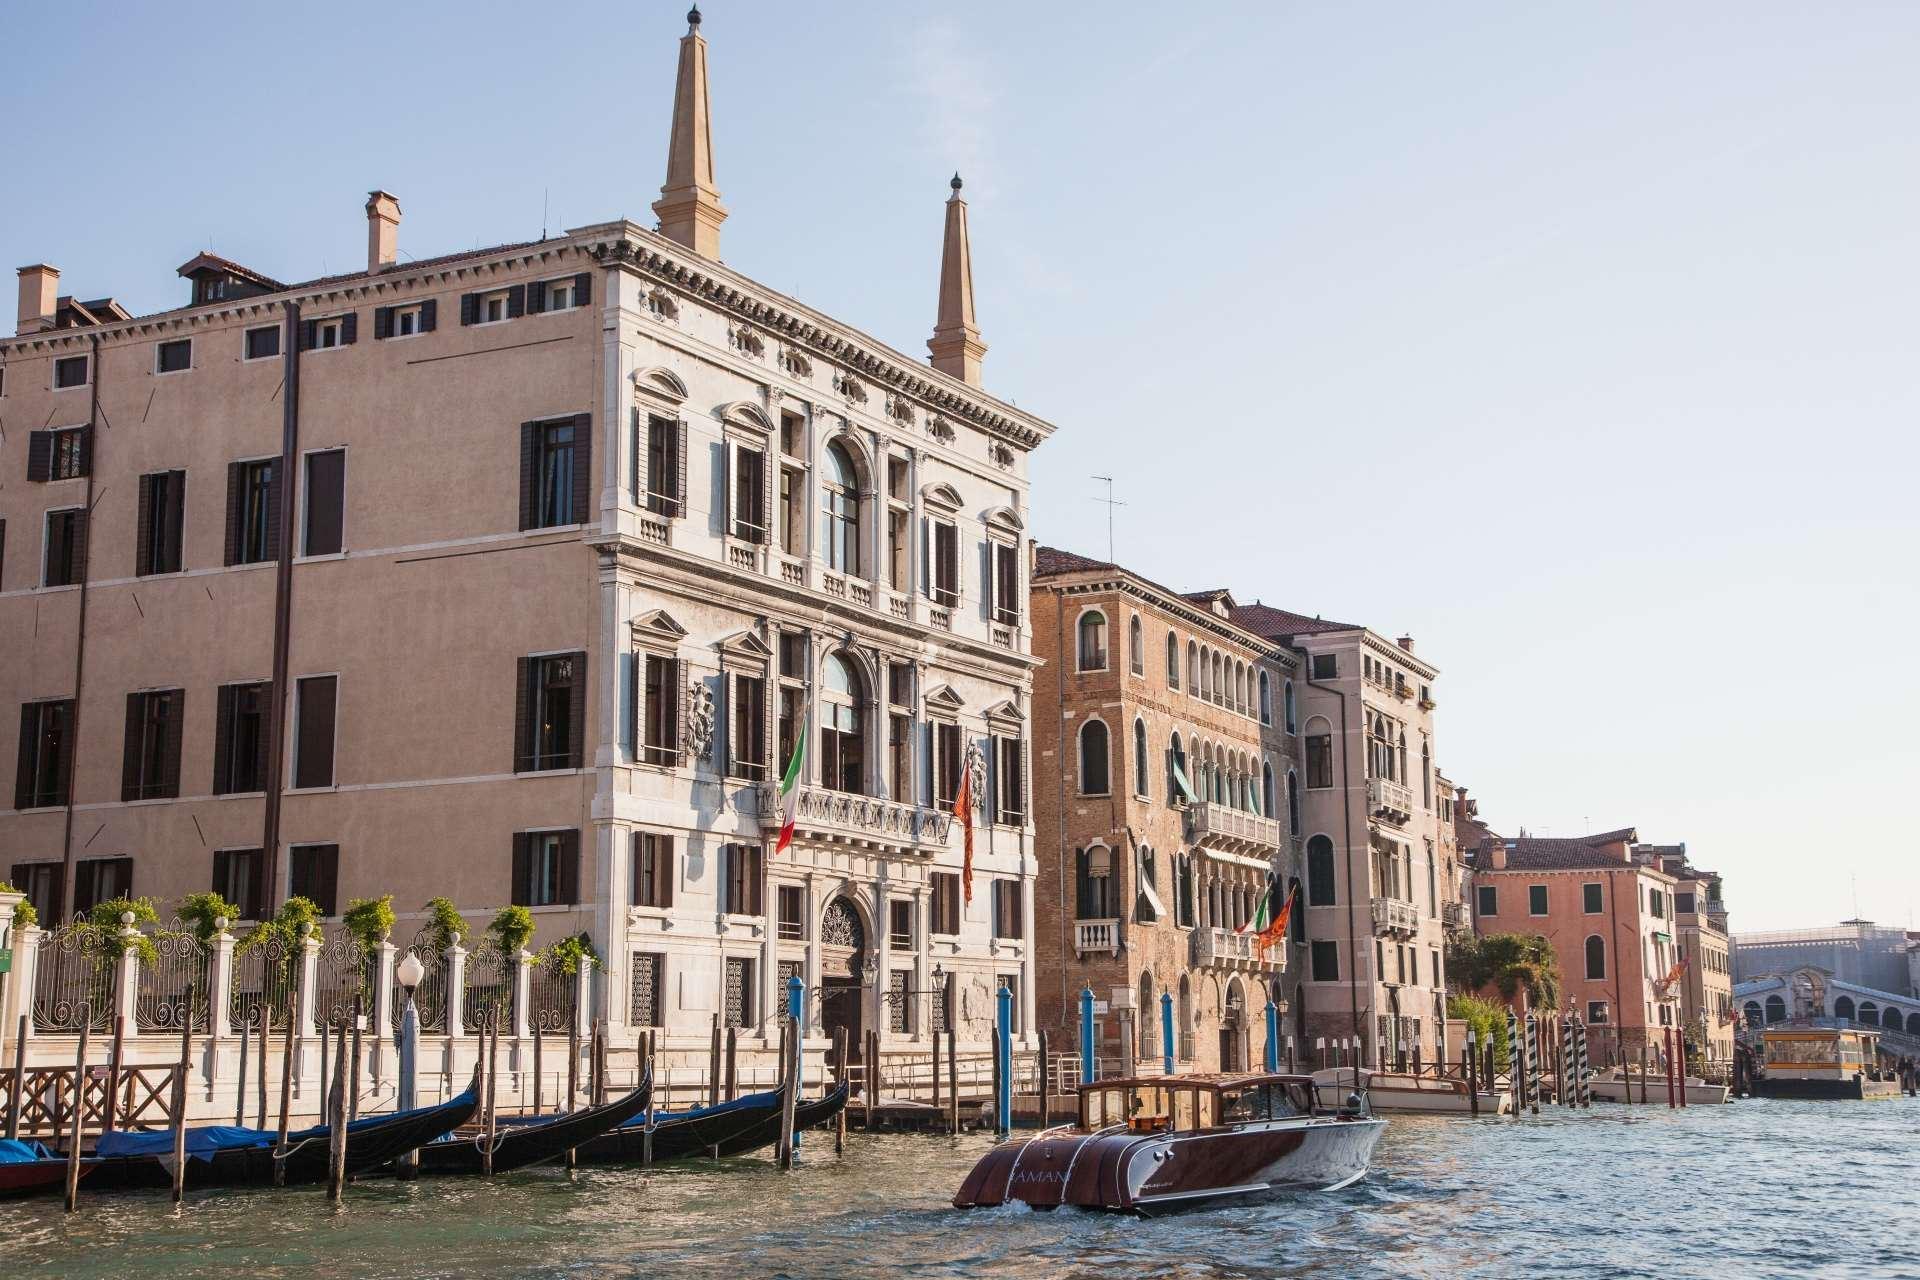 Aman Venice luxe hotel deals